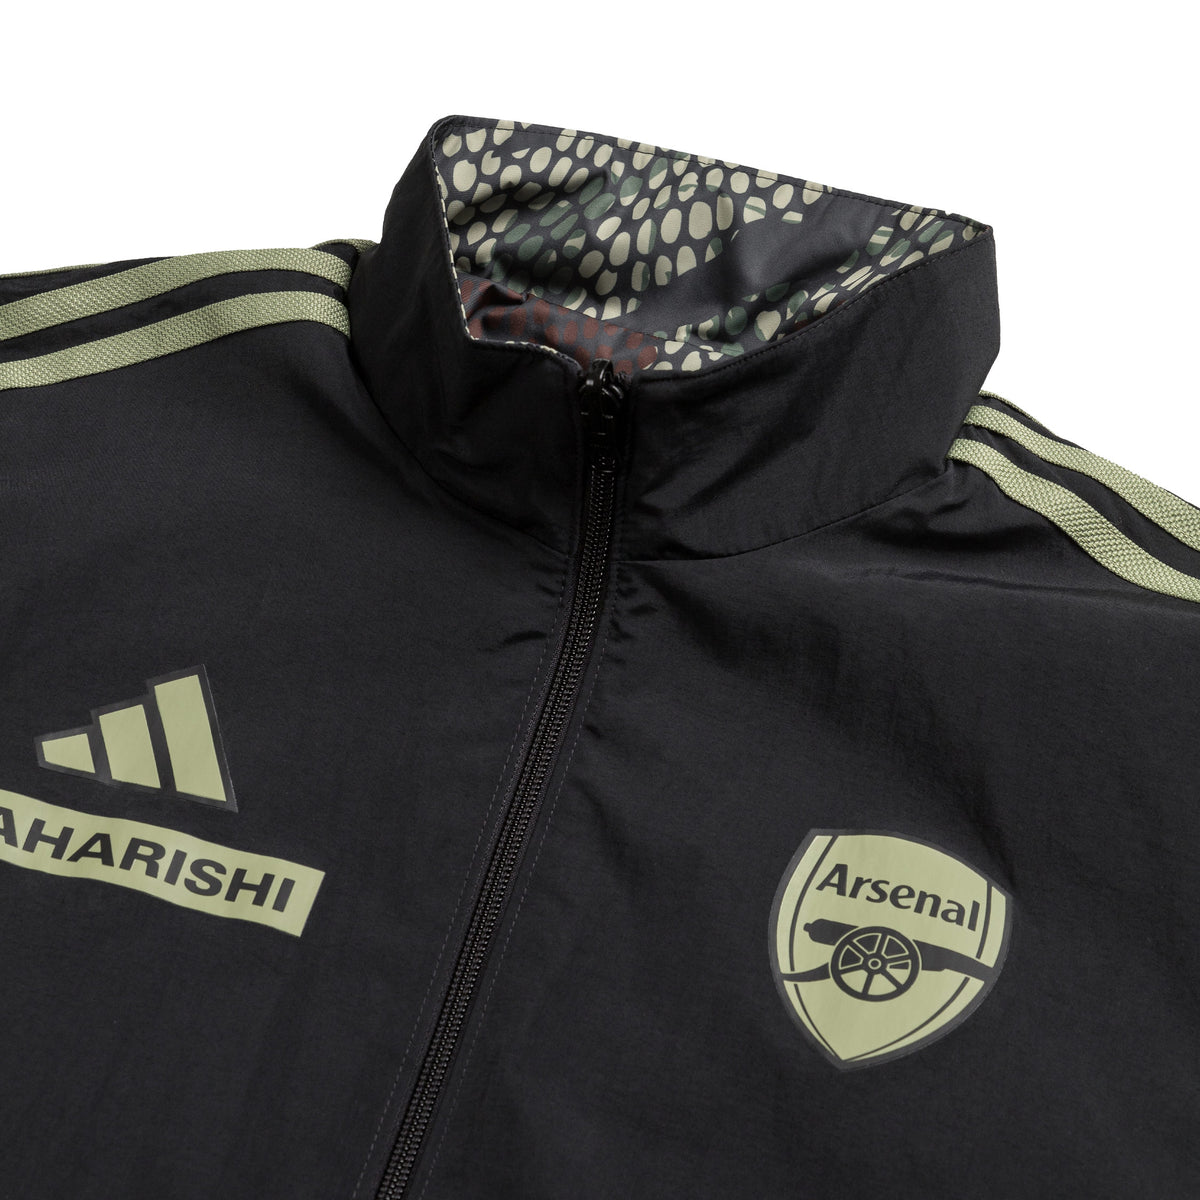 Adidas x Arsenal FC x Maharishi Anthem Jacket – buy now at Asphaltgold ...